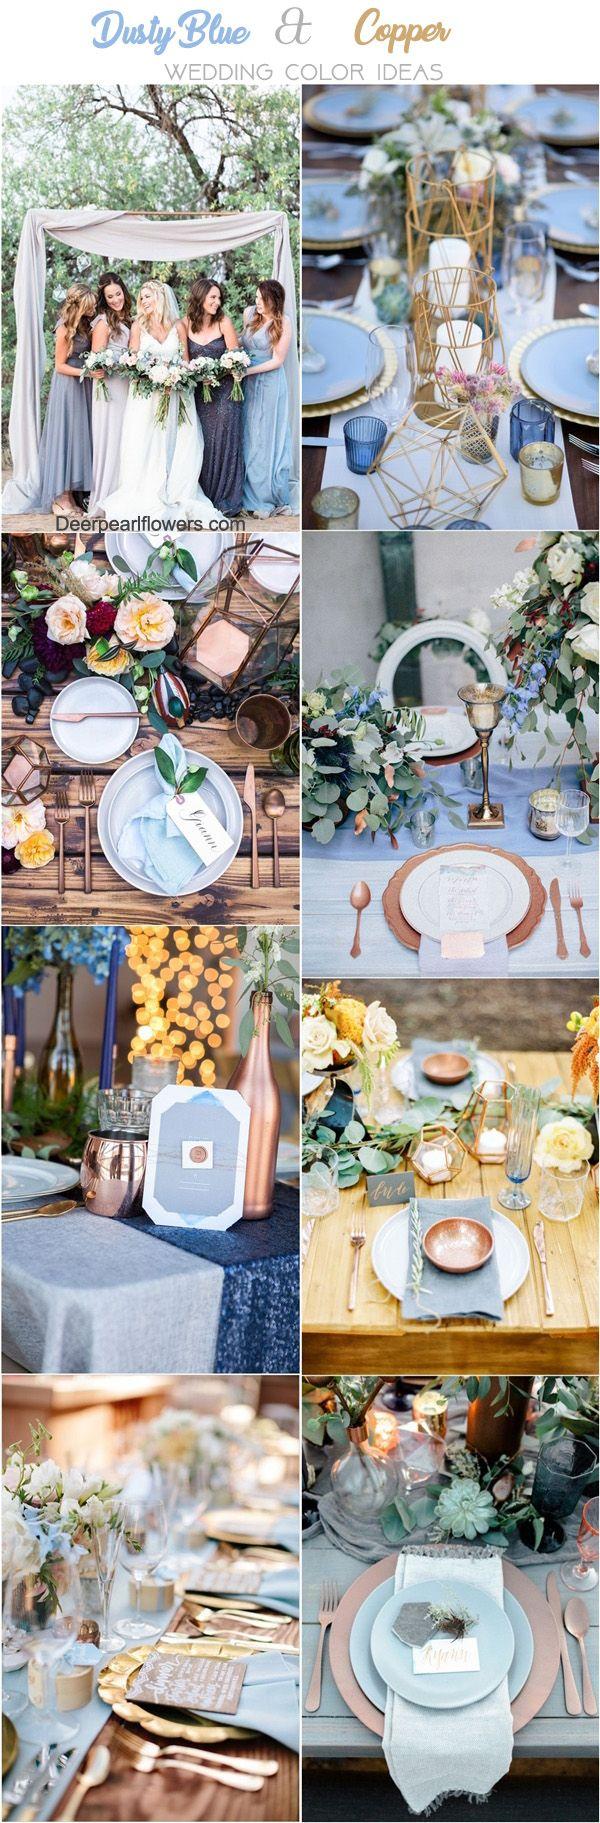 زفاف - Top 20 Dusty Blue And Copper Wedding Color Ideas